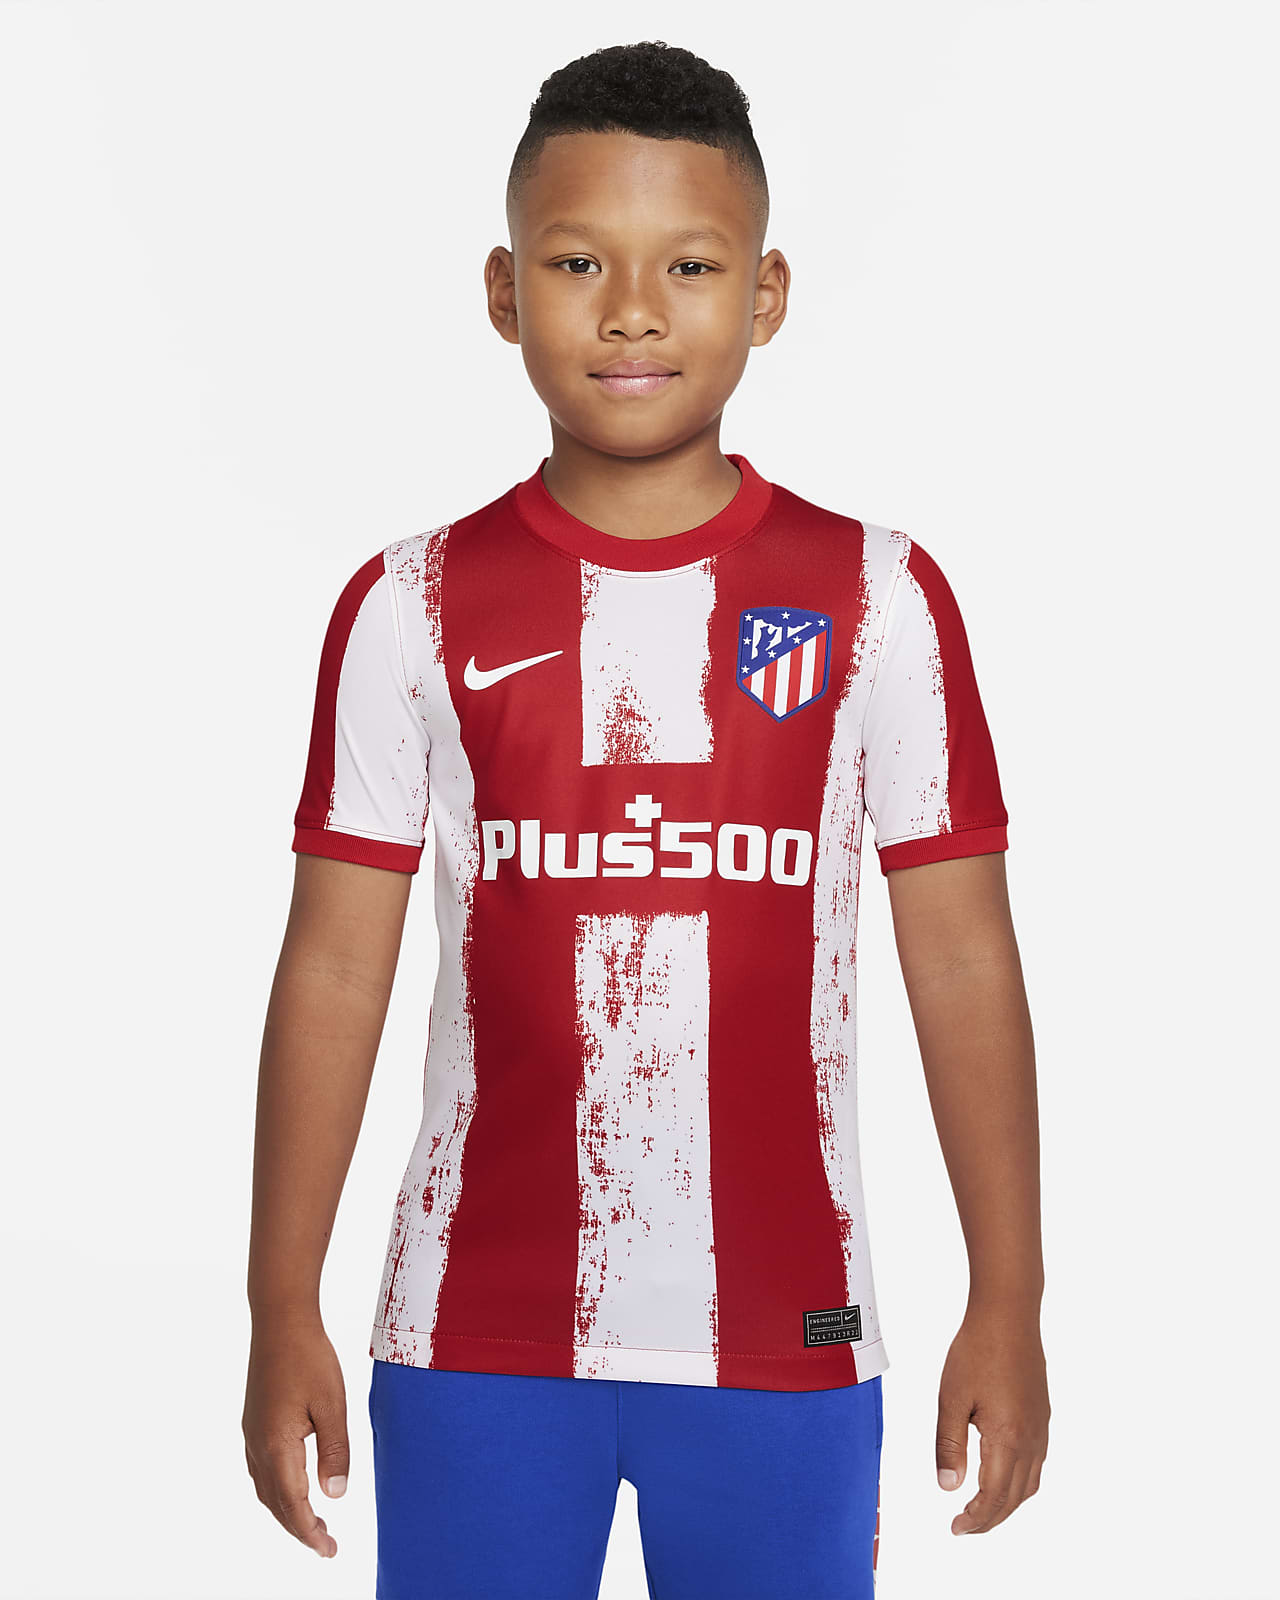 Atlético de Madrid Kids Clothing, Atlético de Madrid Kids Kits, Kids Shop,  Clothing